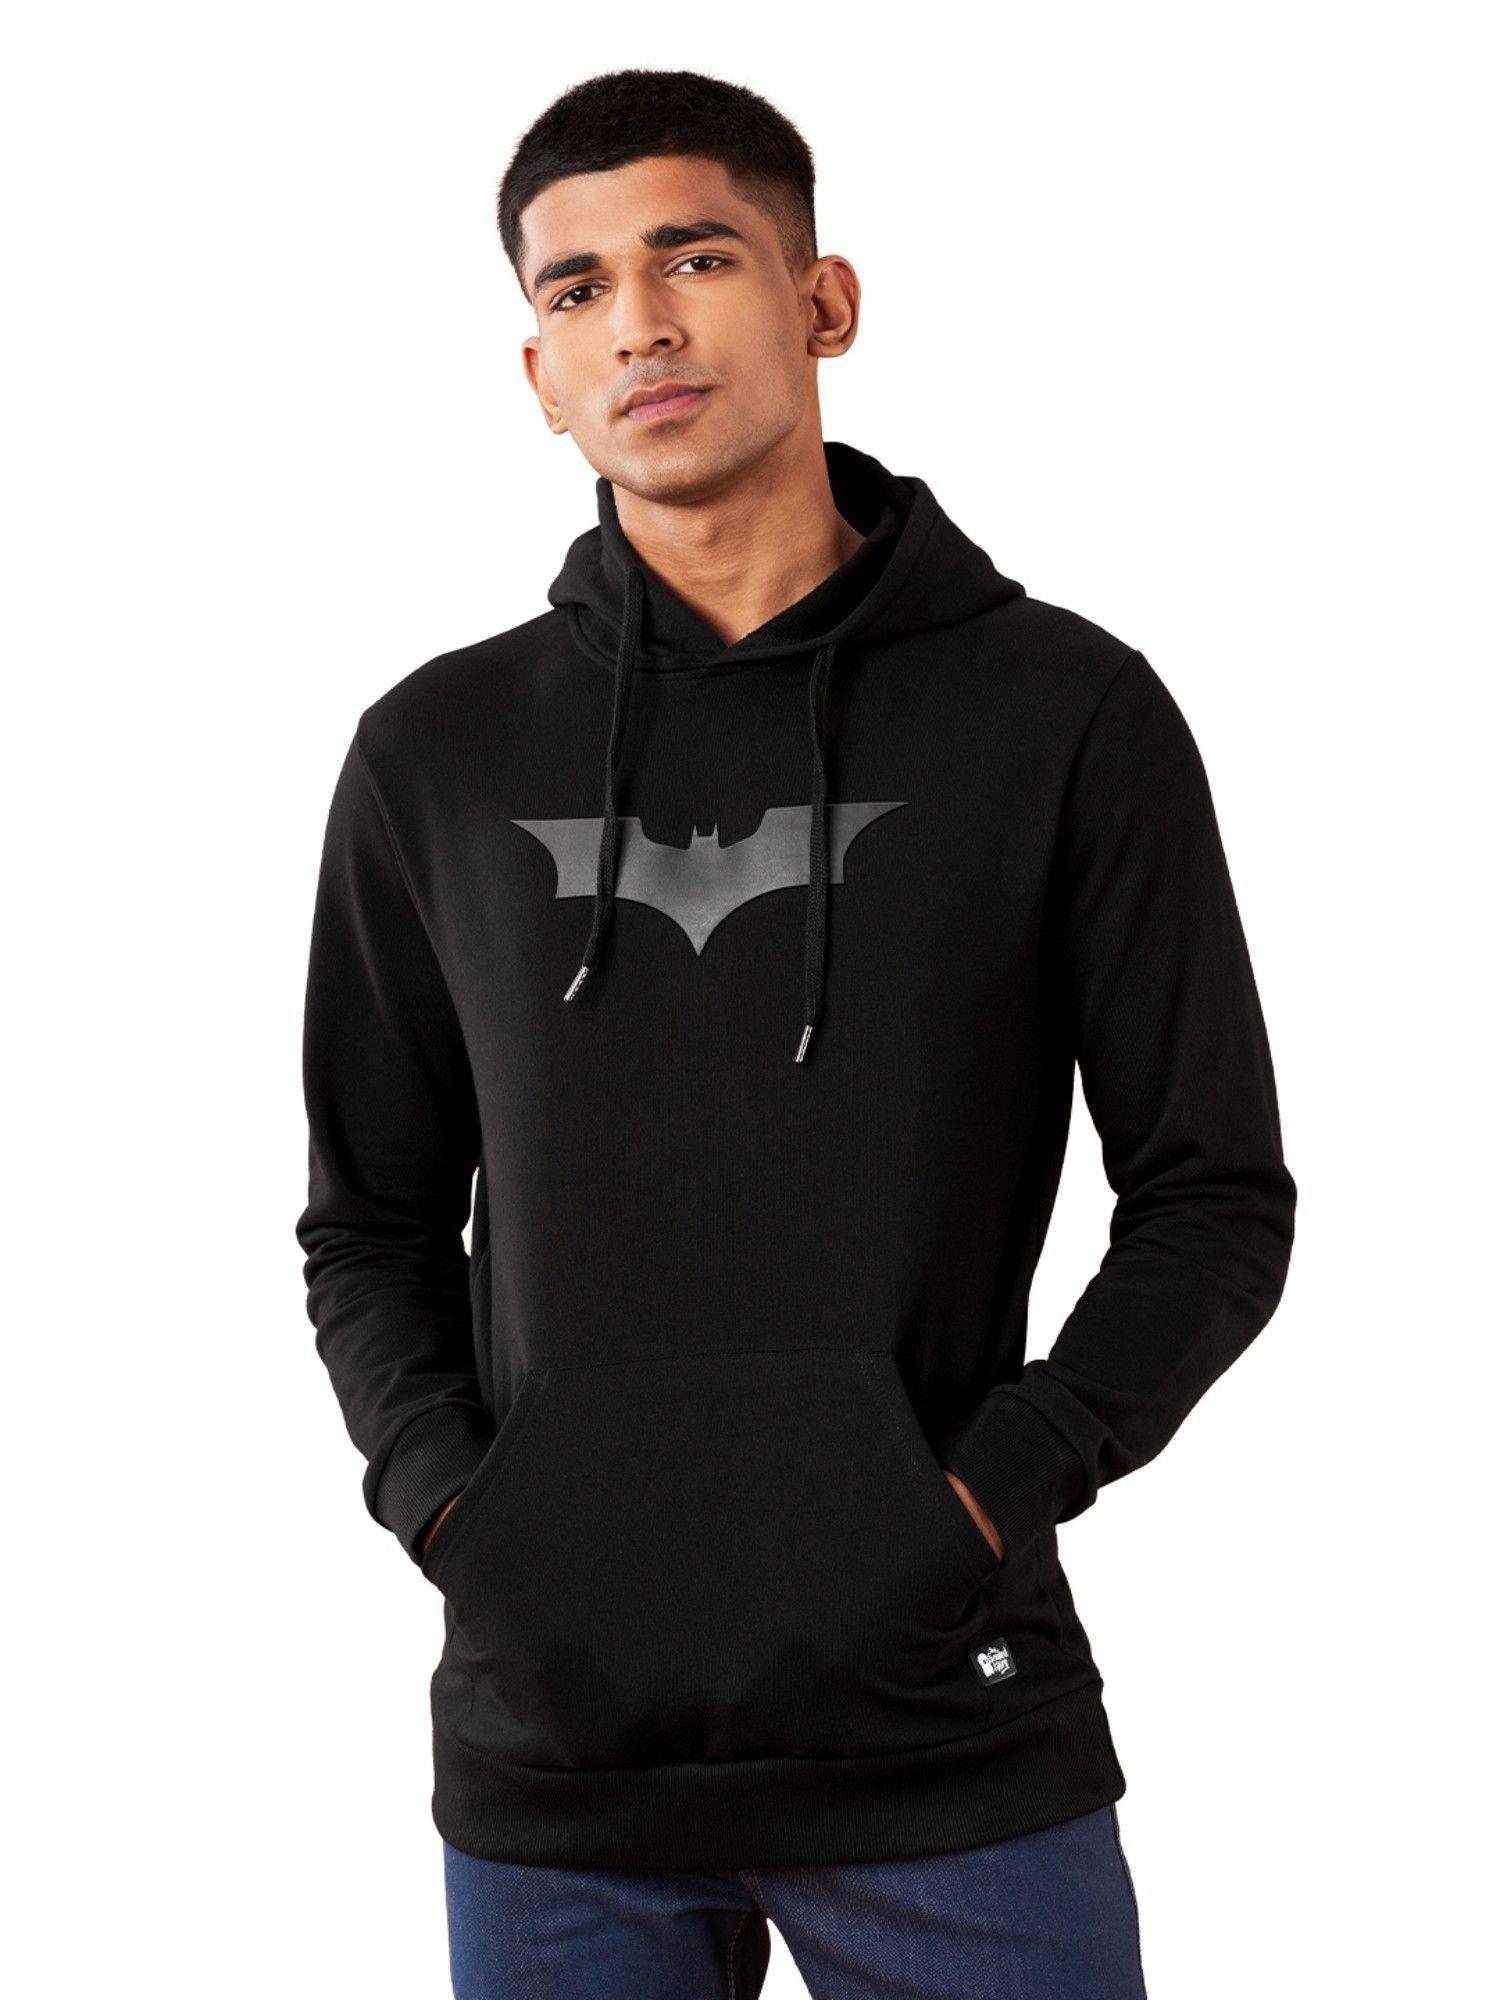 official batman 3d logo black color hoodies for men